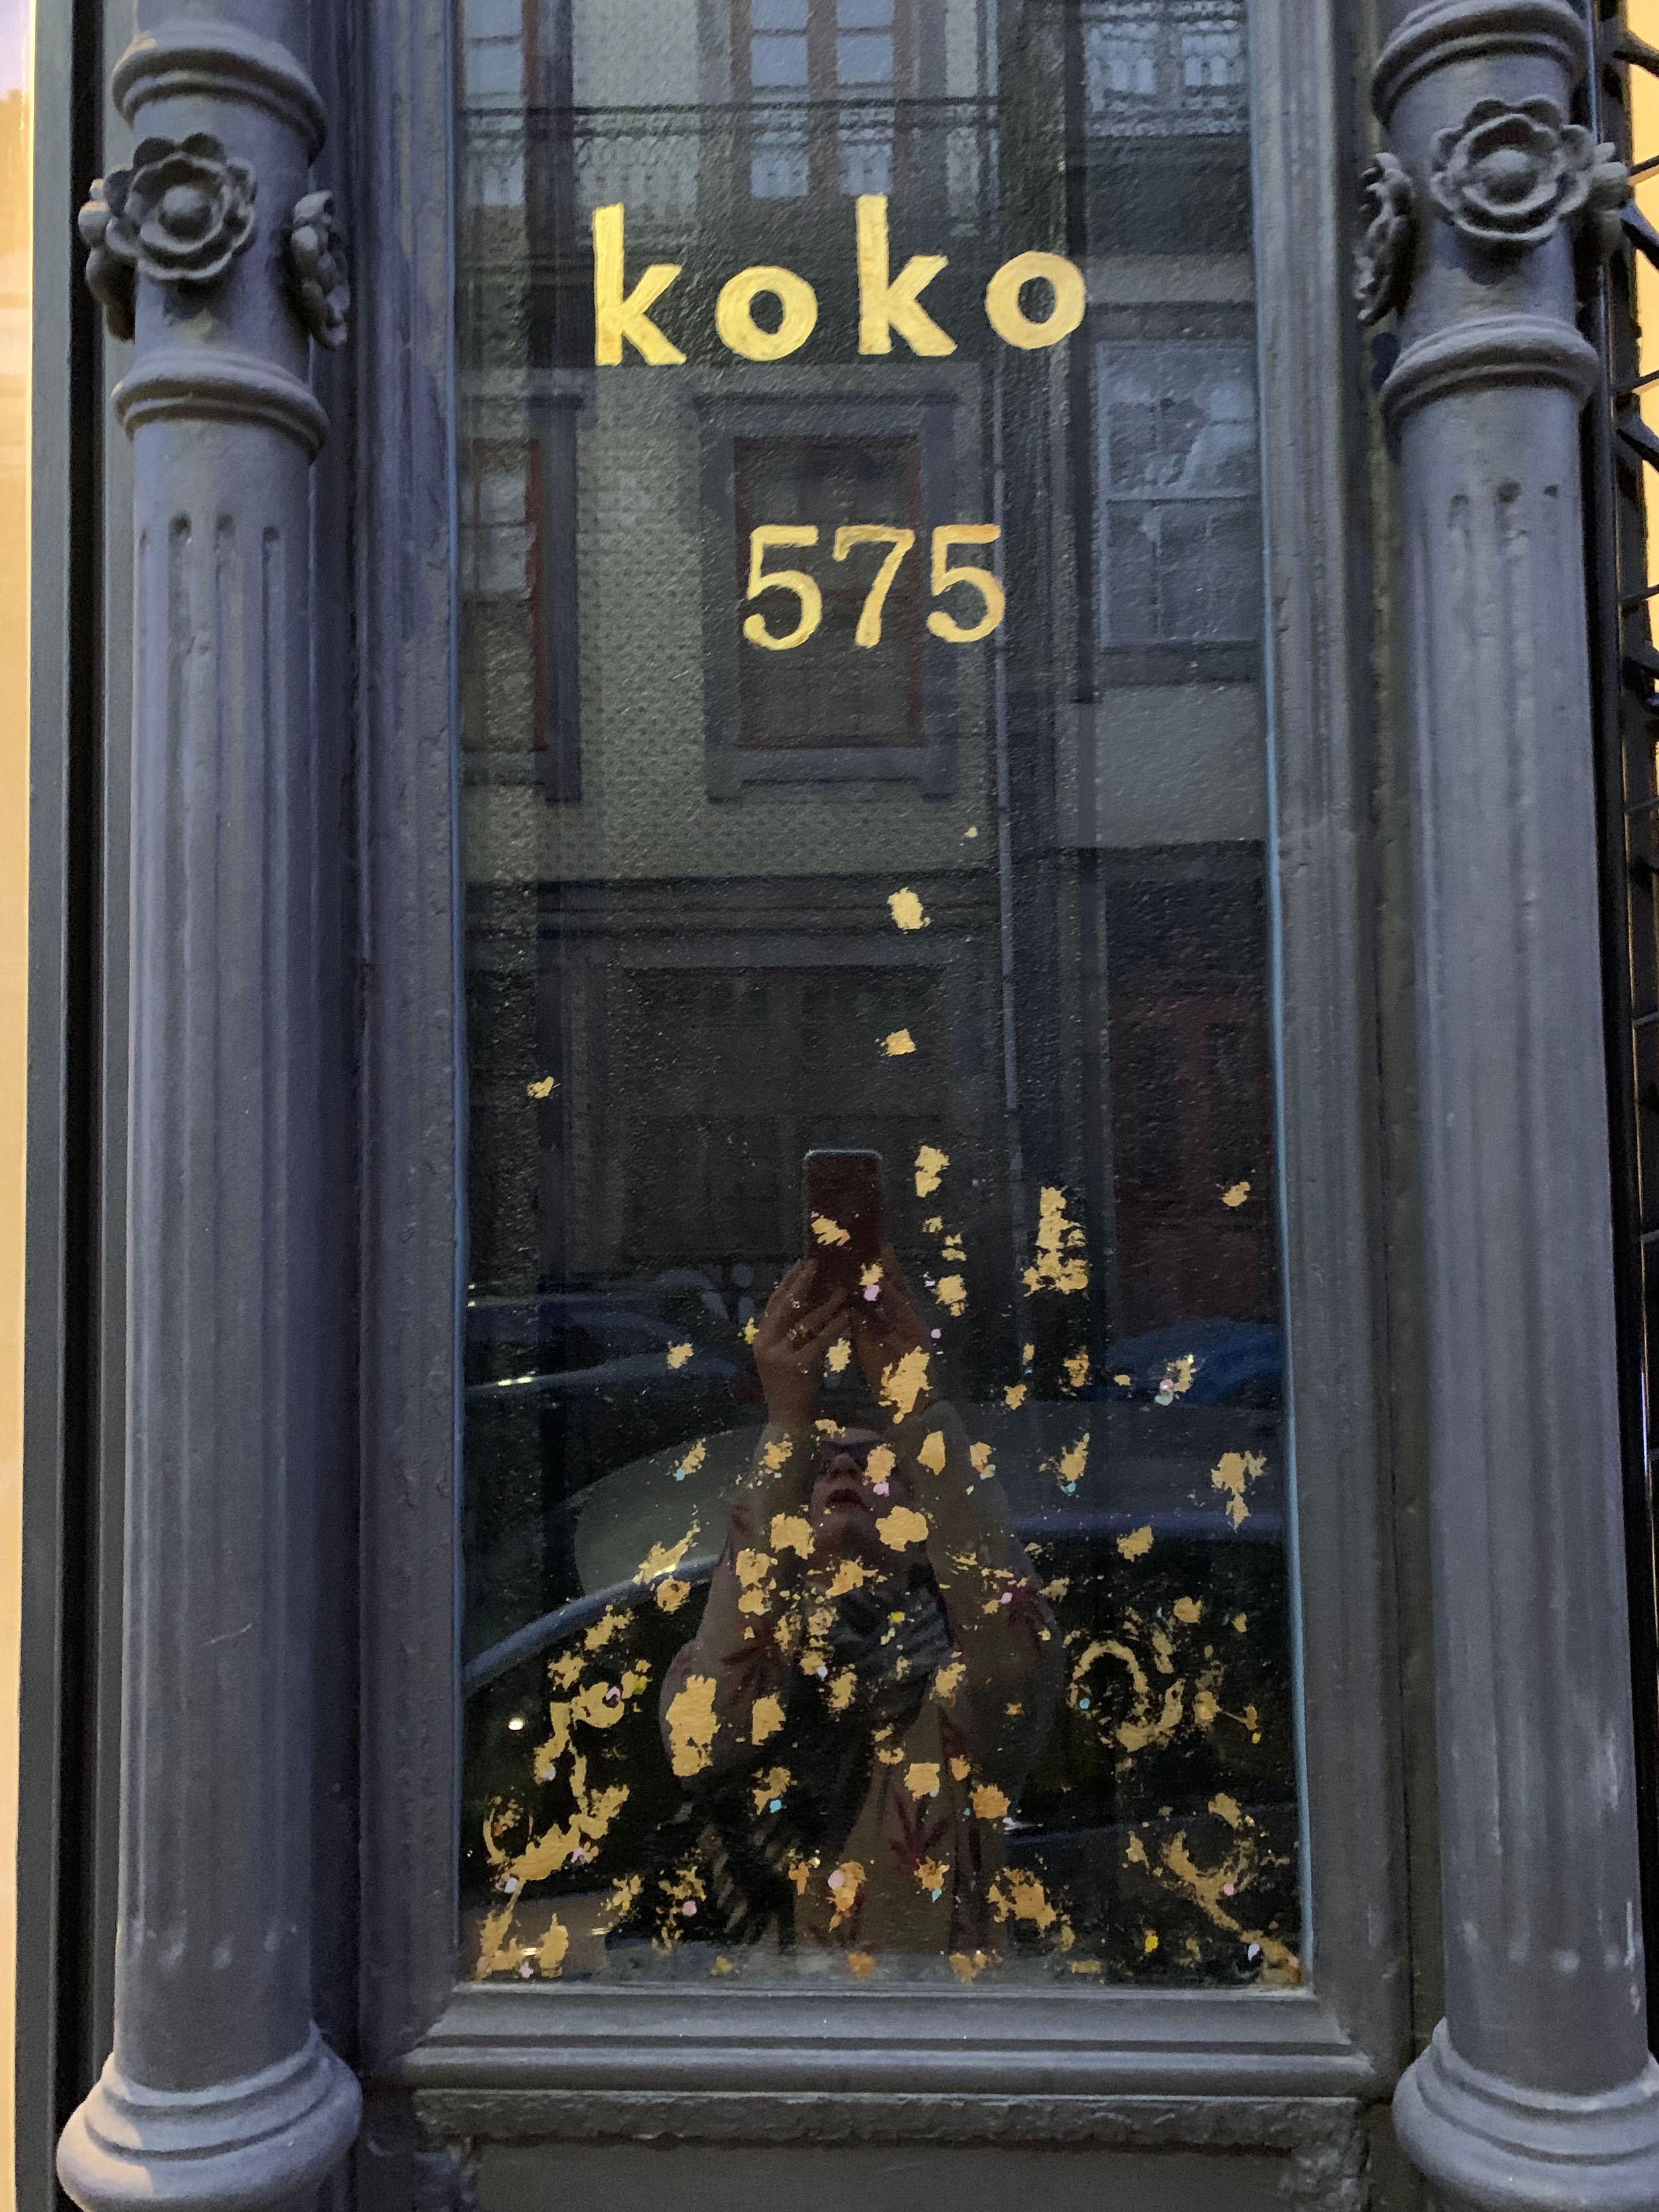 The new Koko store front window